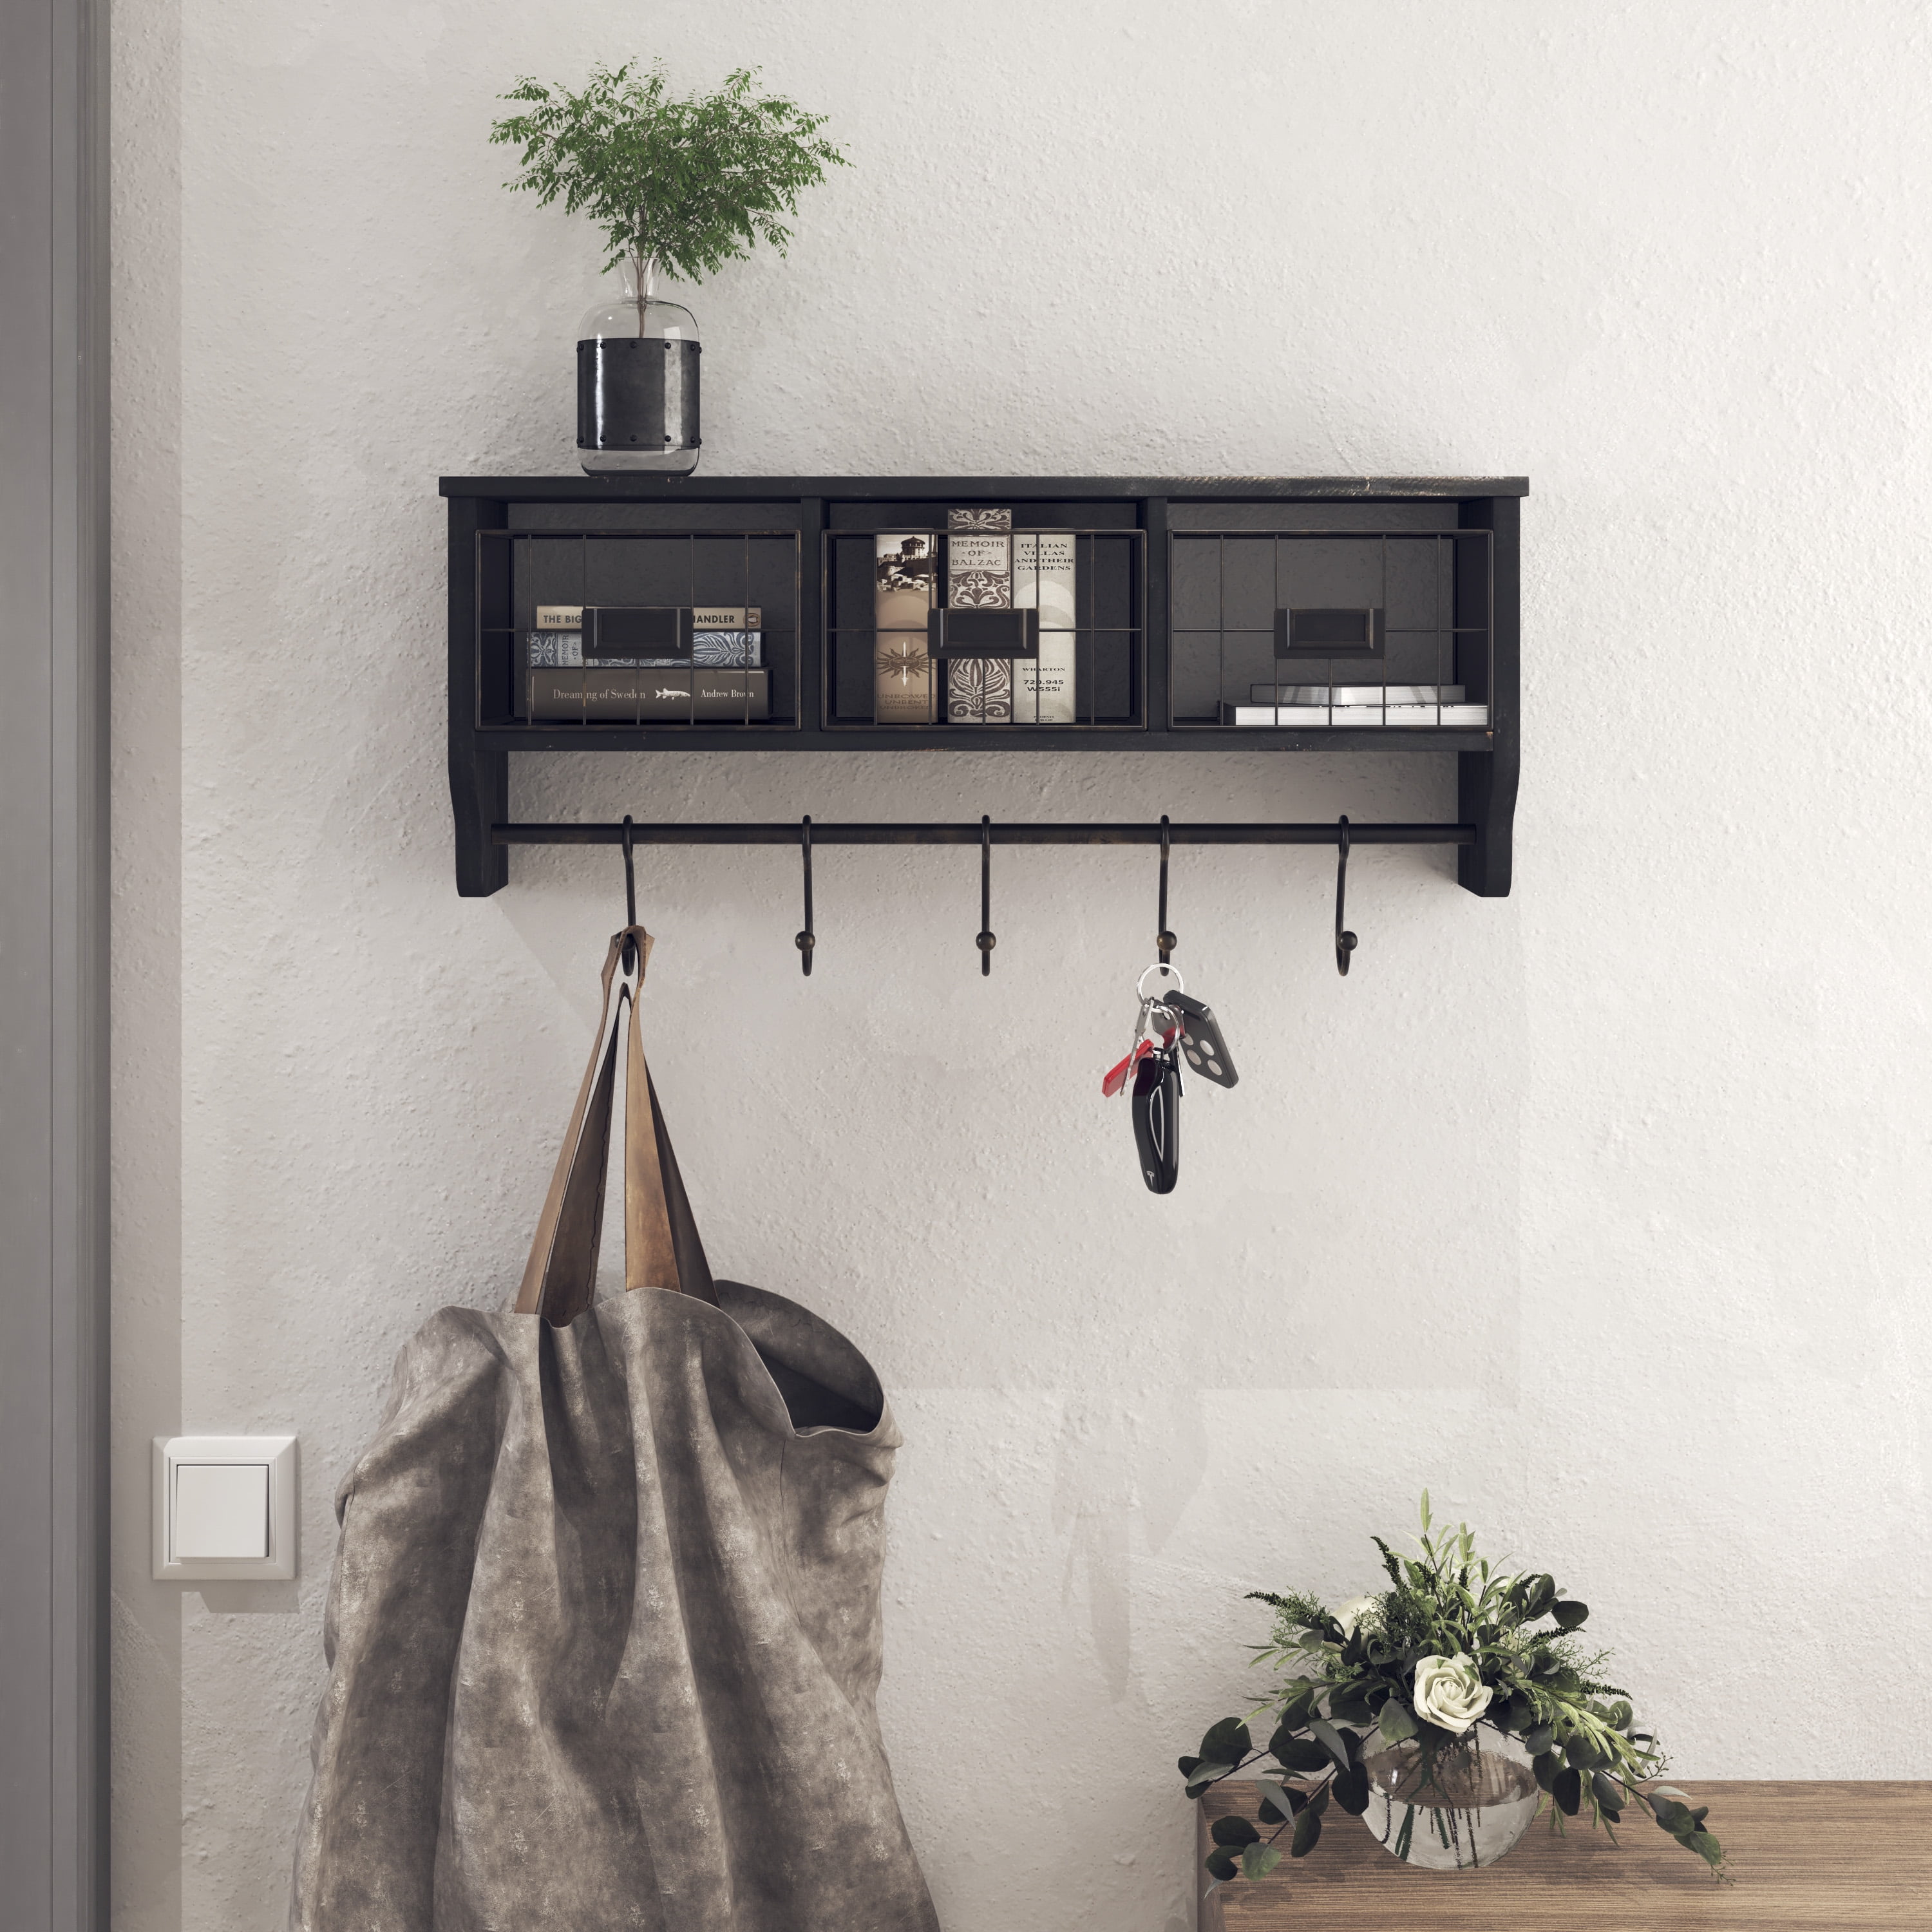 Rustic Wood Towel Hooks, Wall Mounted Floating Display Shelf Rack